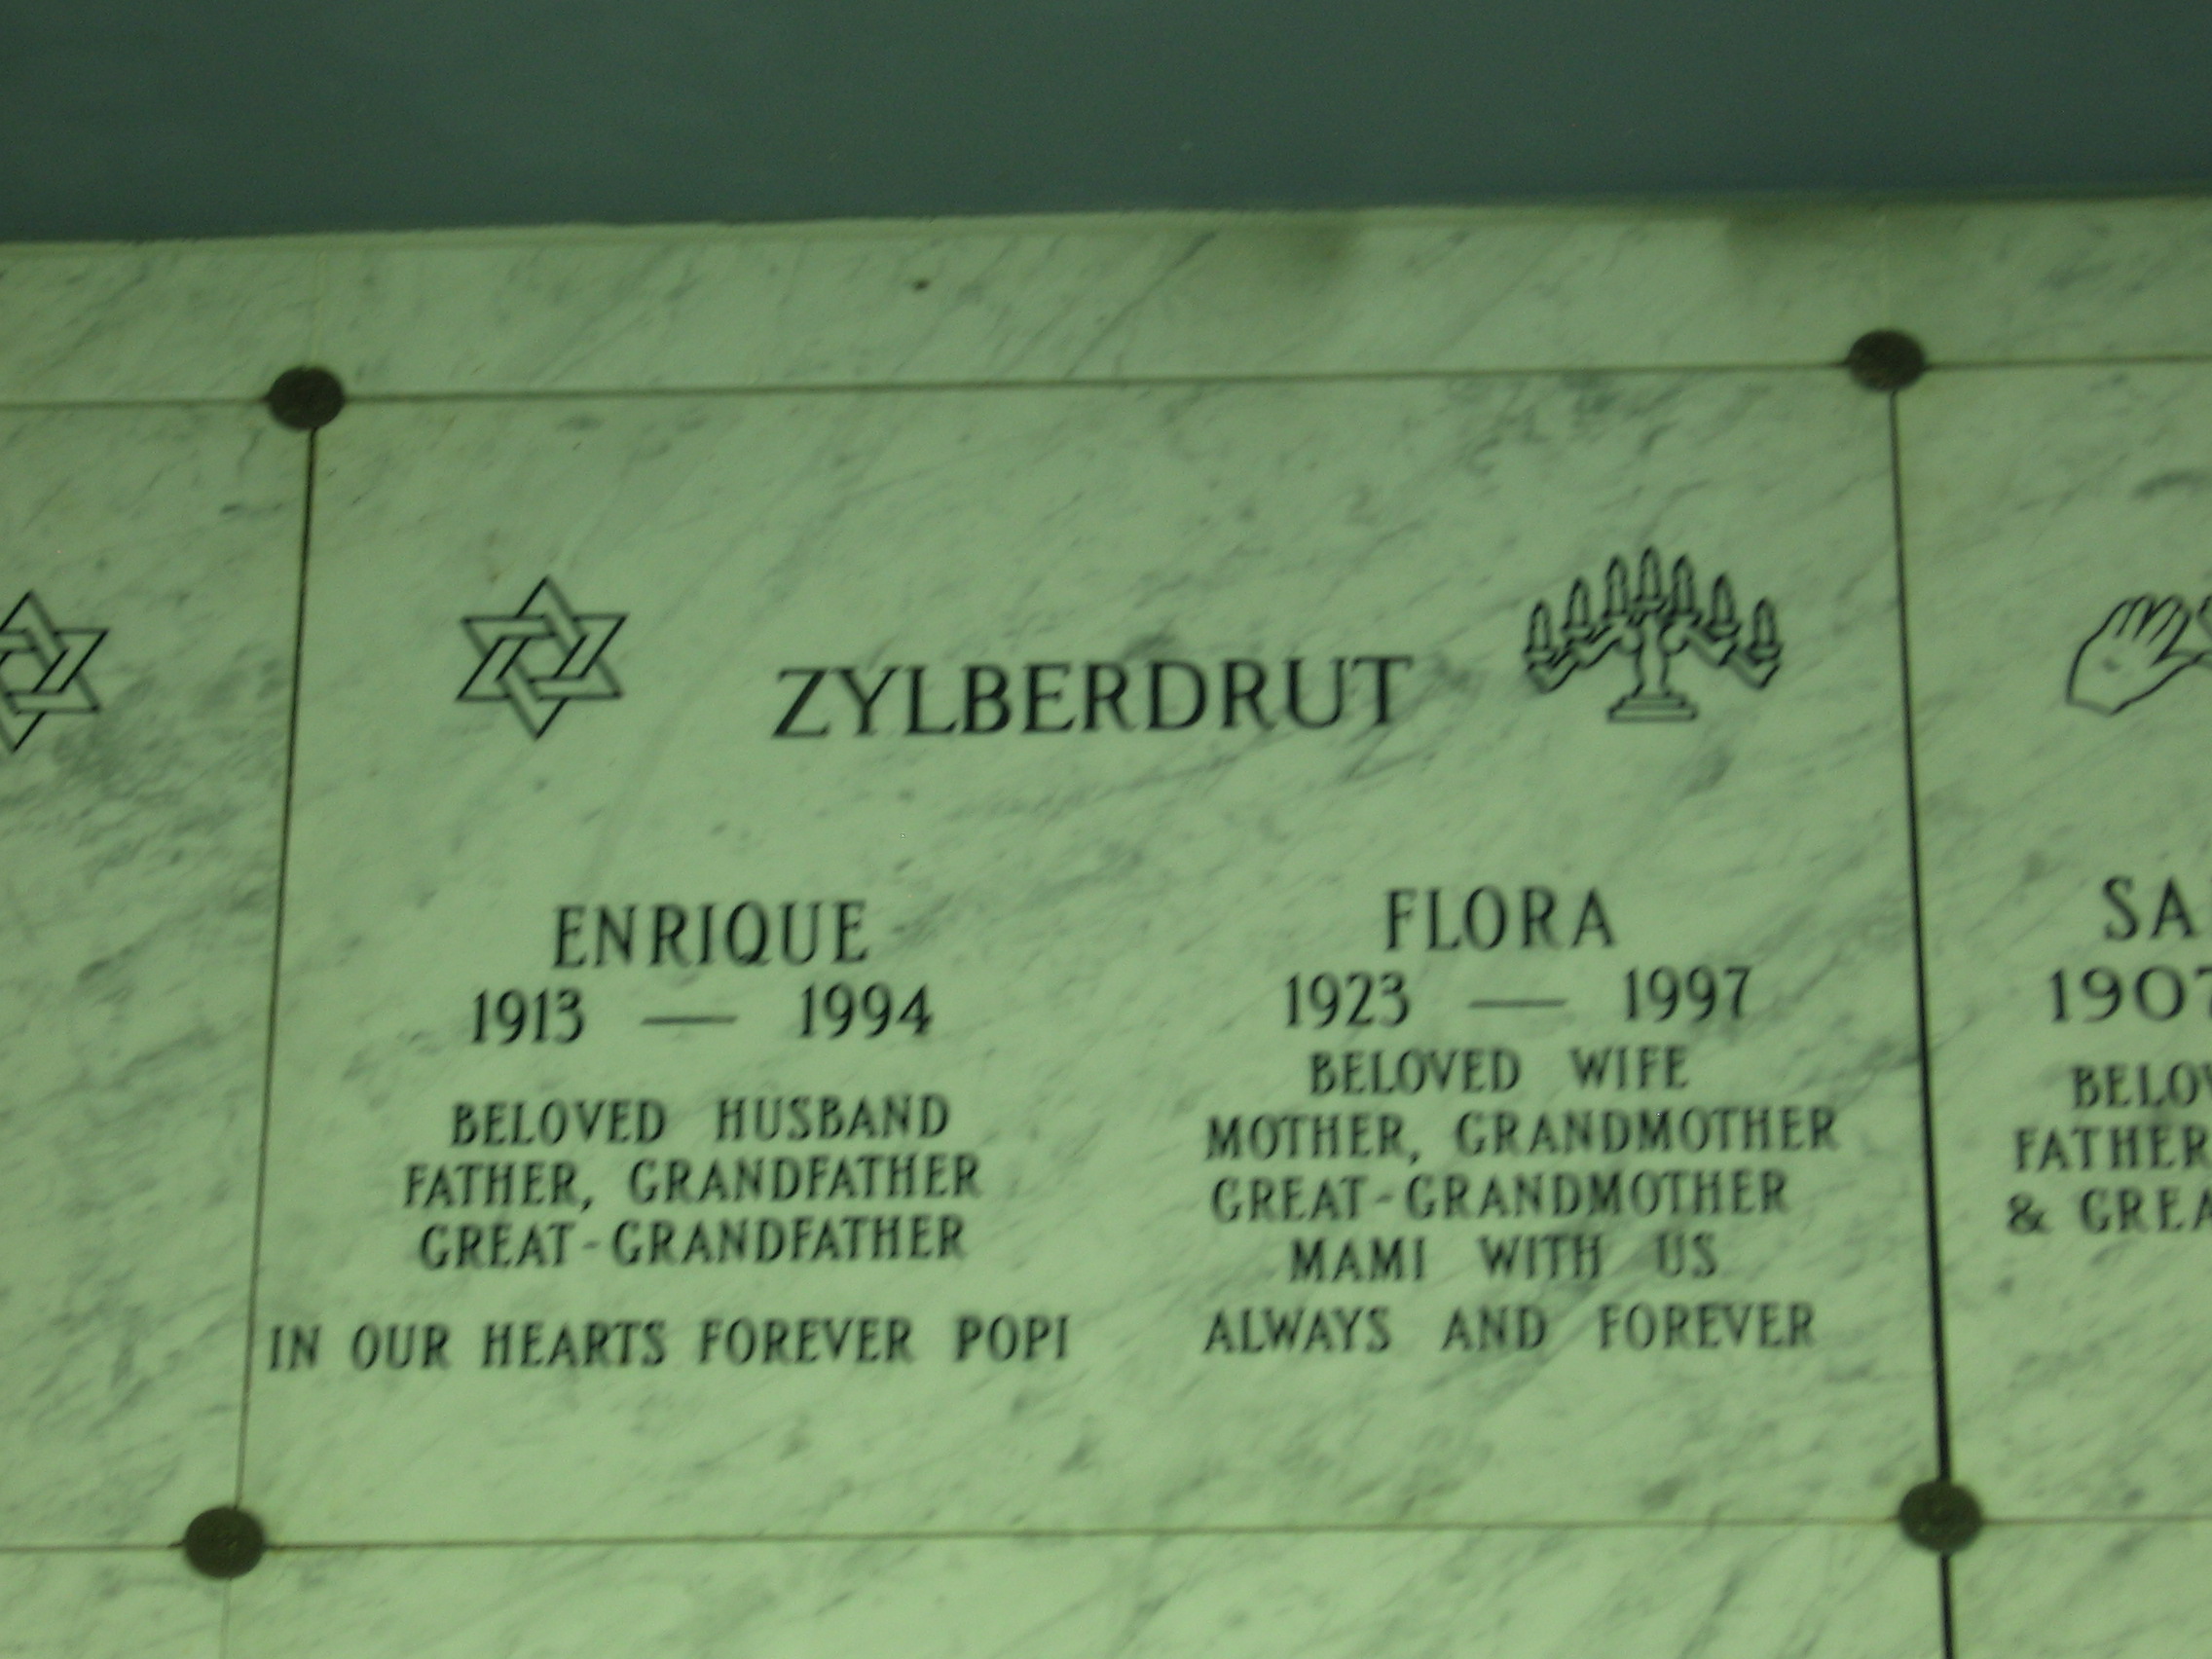 Flora Zylberdrut